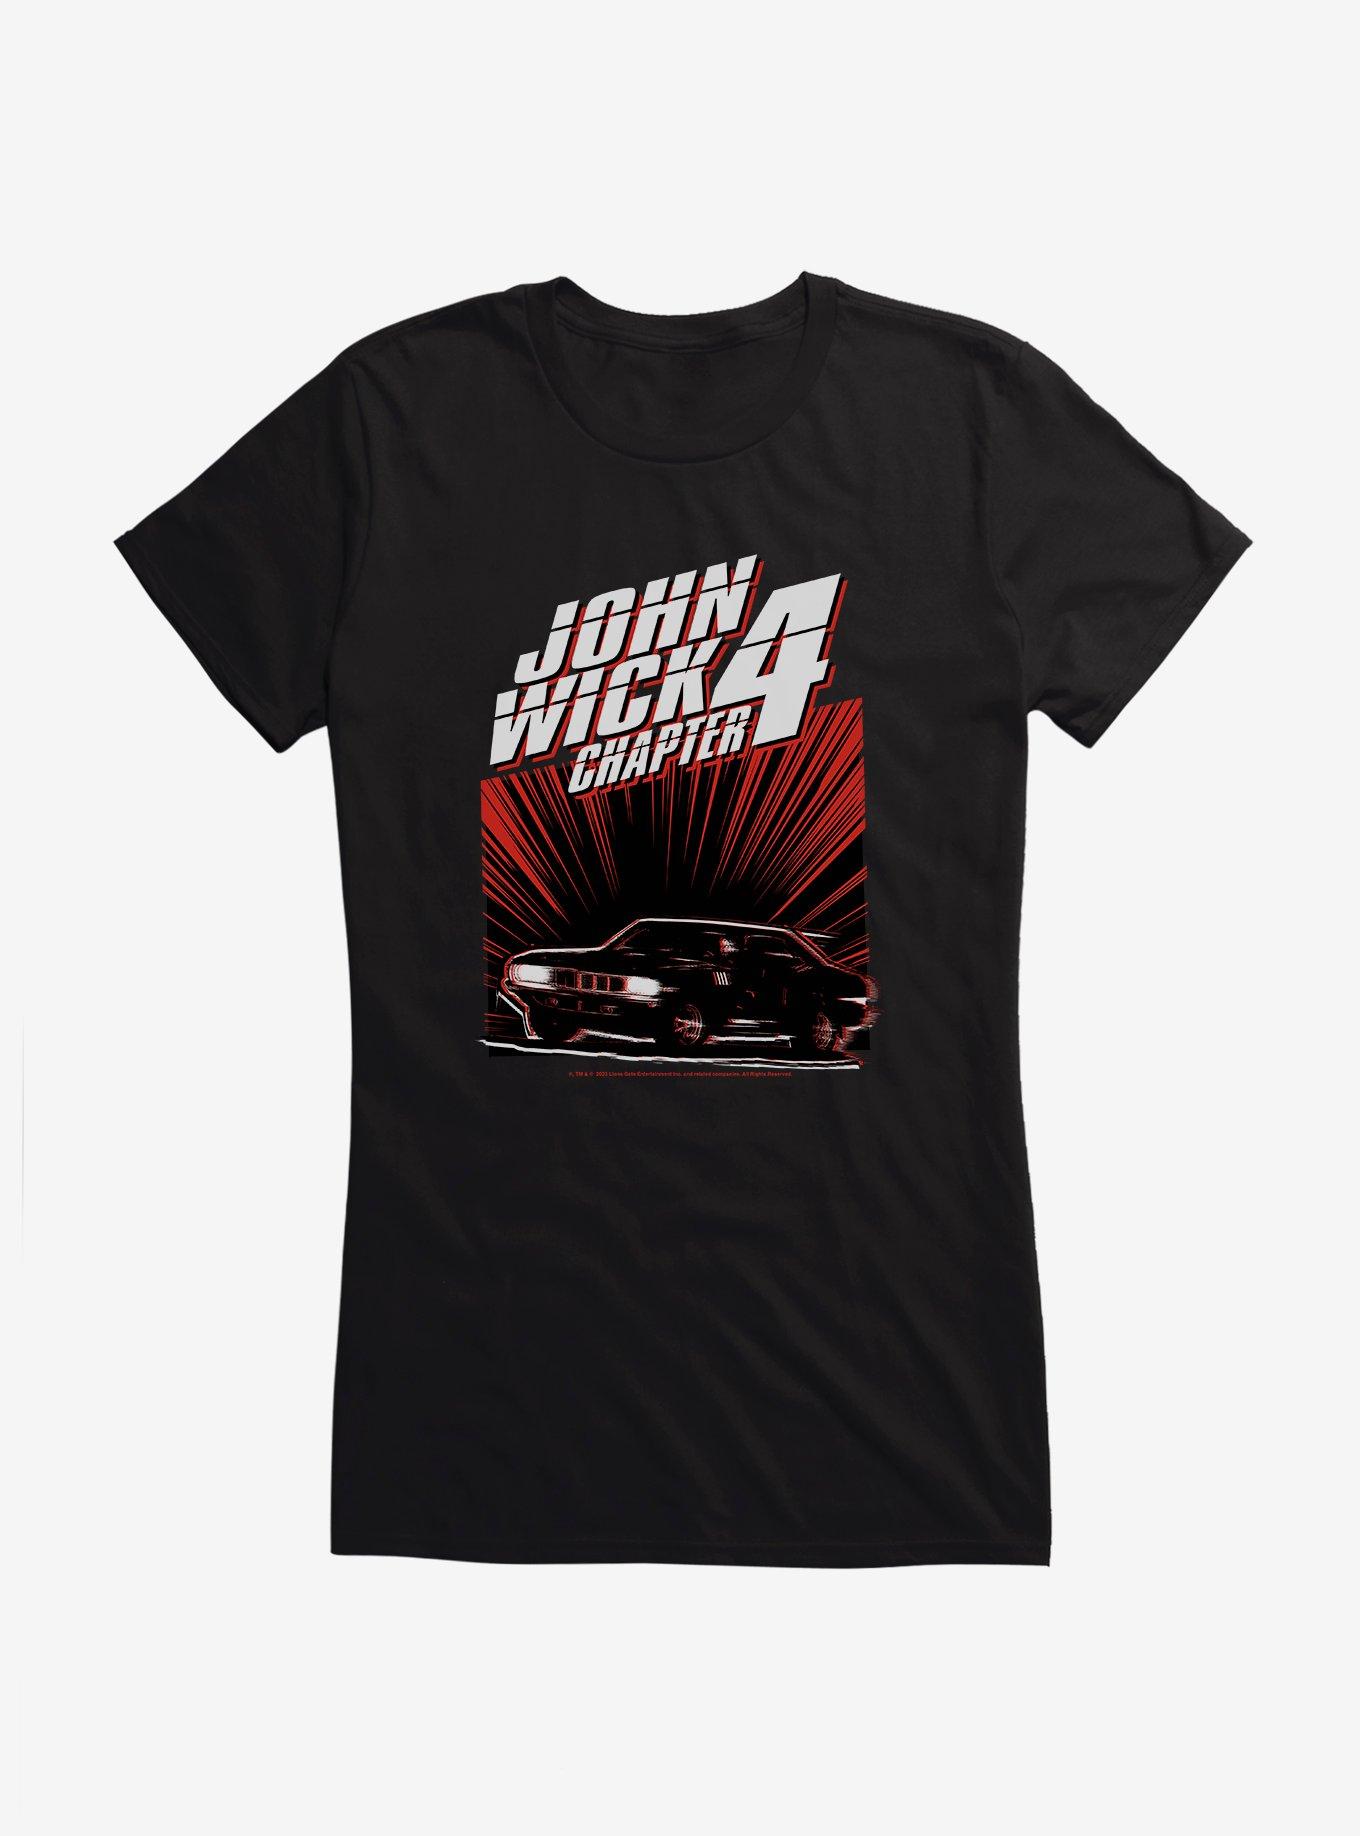 John Wick: Chapter 4 Car Chase Girls T-Shirt